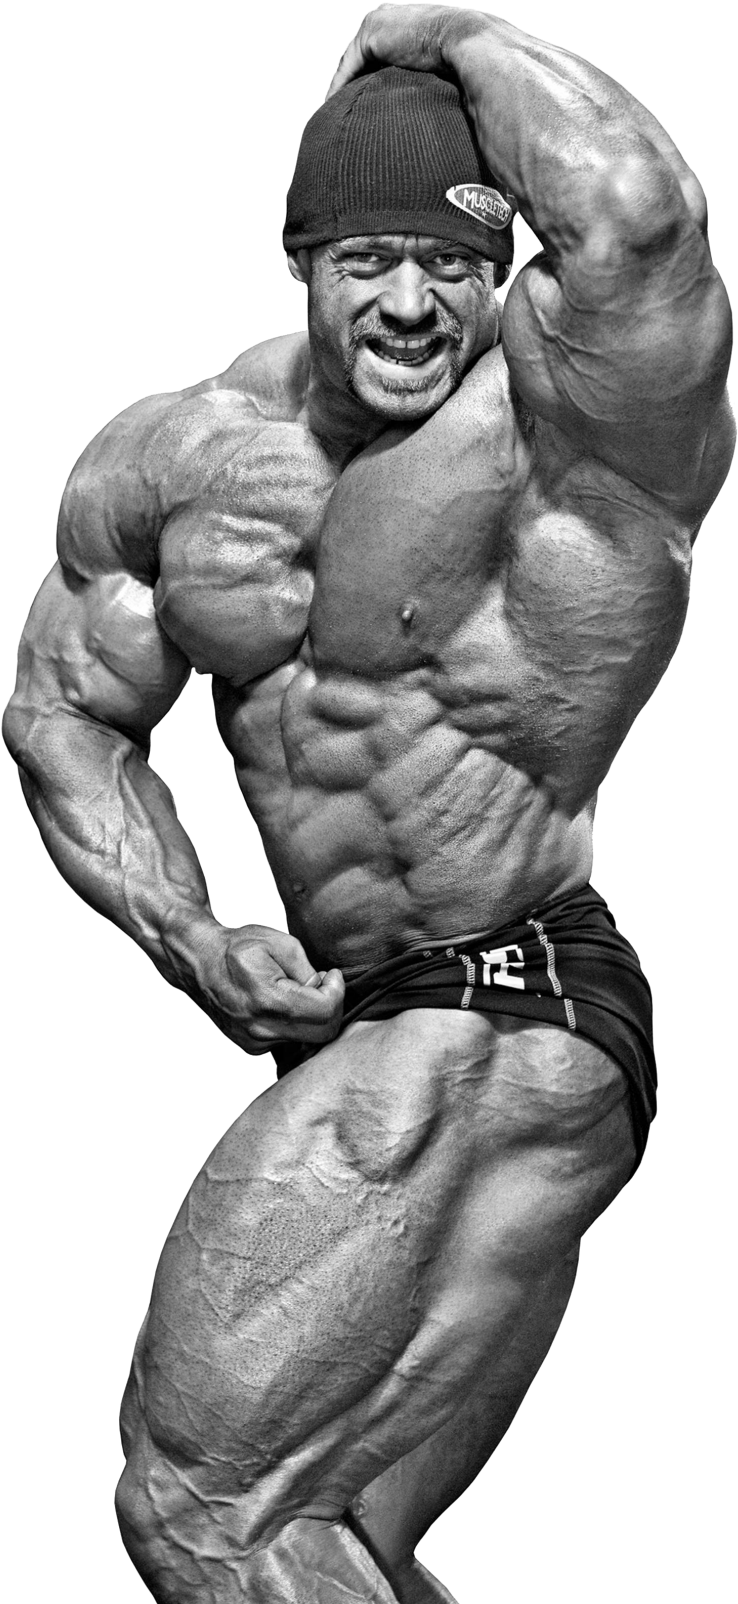 A Muscular Man Flexing His Muscles